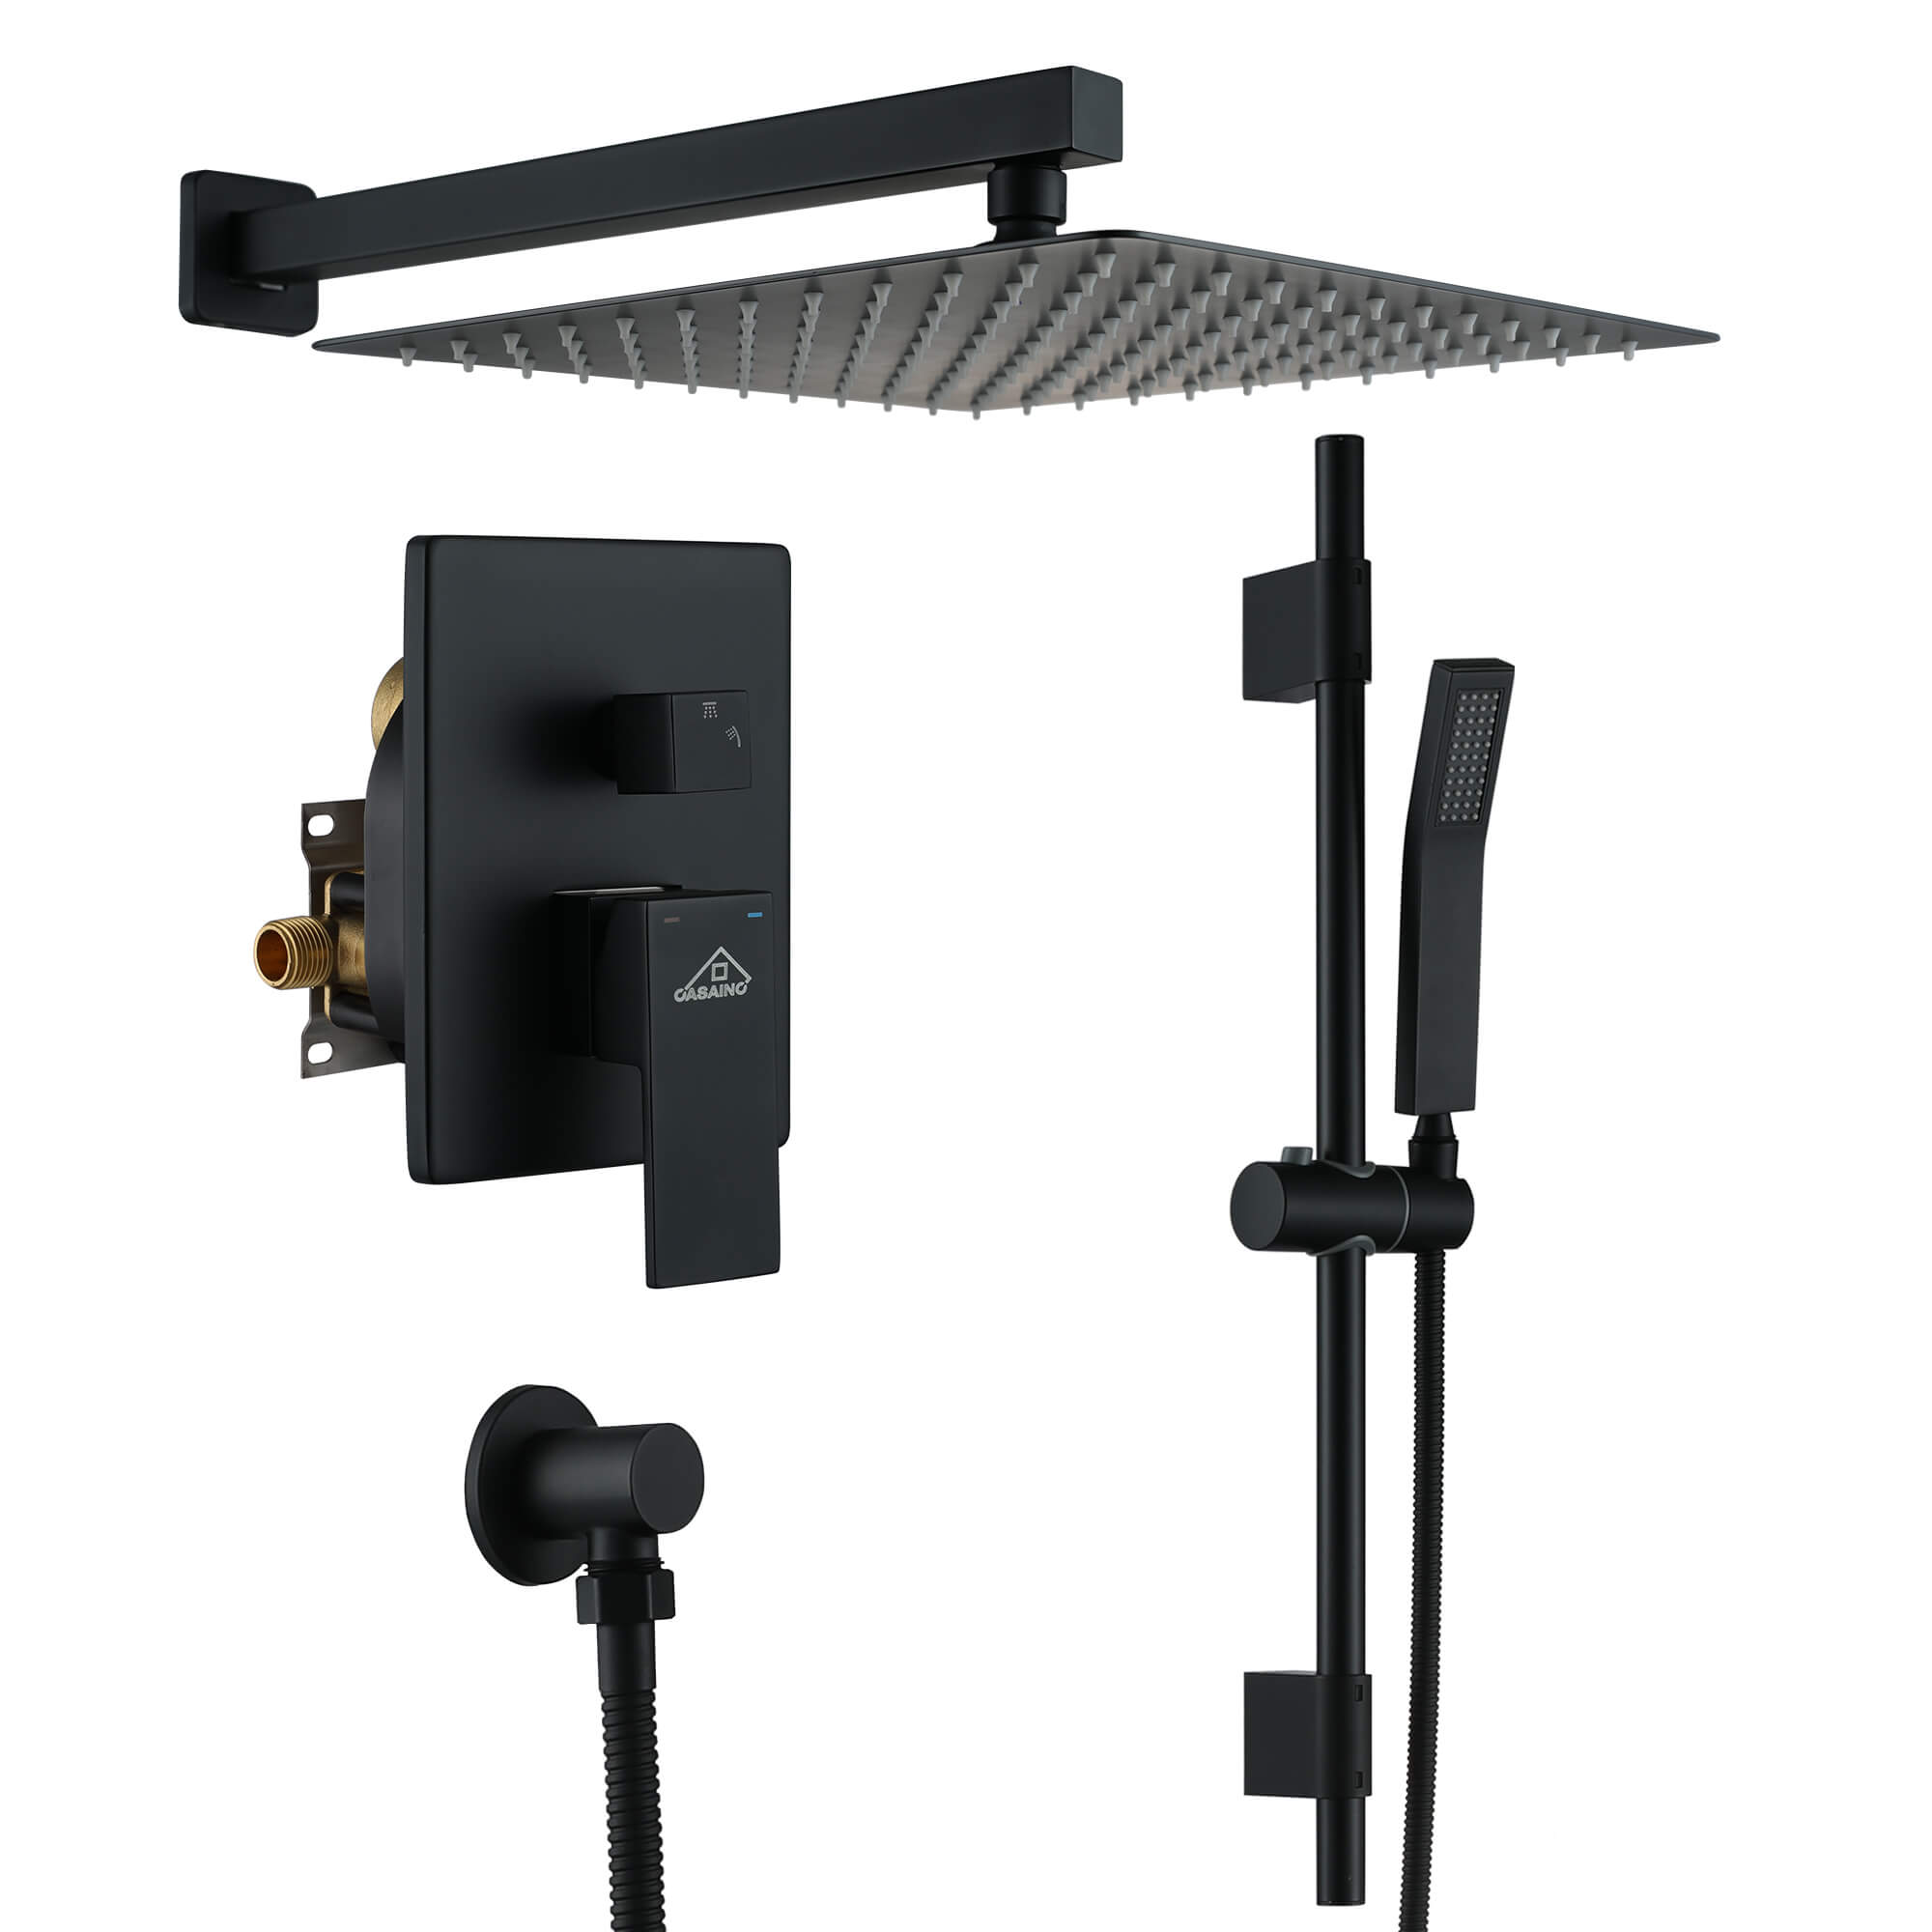 CASAINC Matte Black Wall Mounted Shower System with Sliding Bar